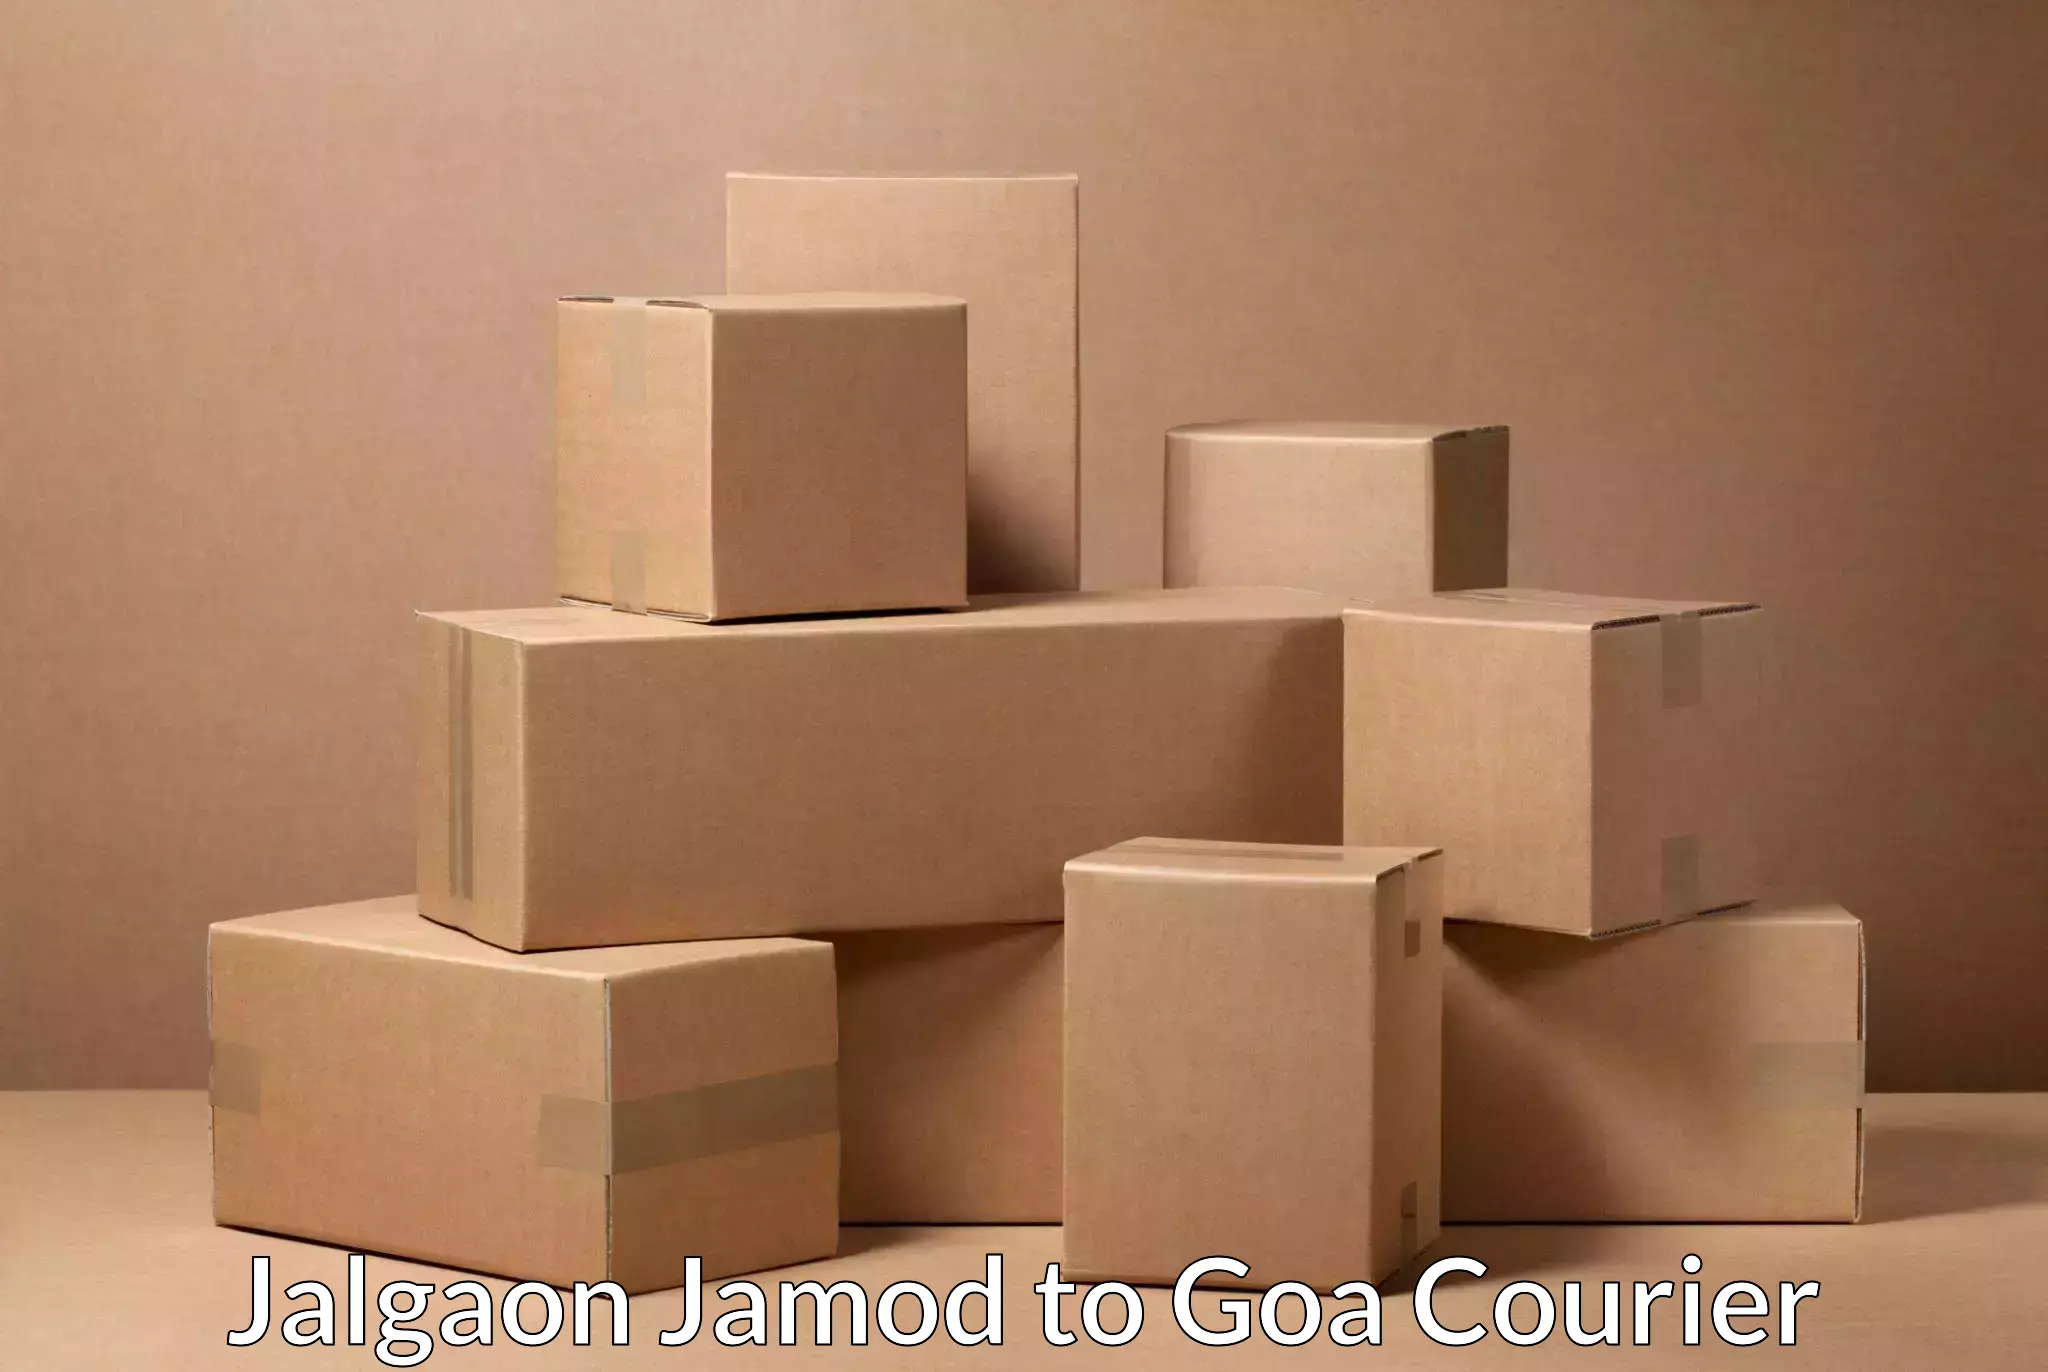 Courier rate comparison Jalgaon Jamod to South Goa